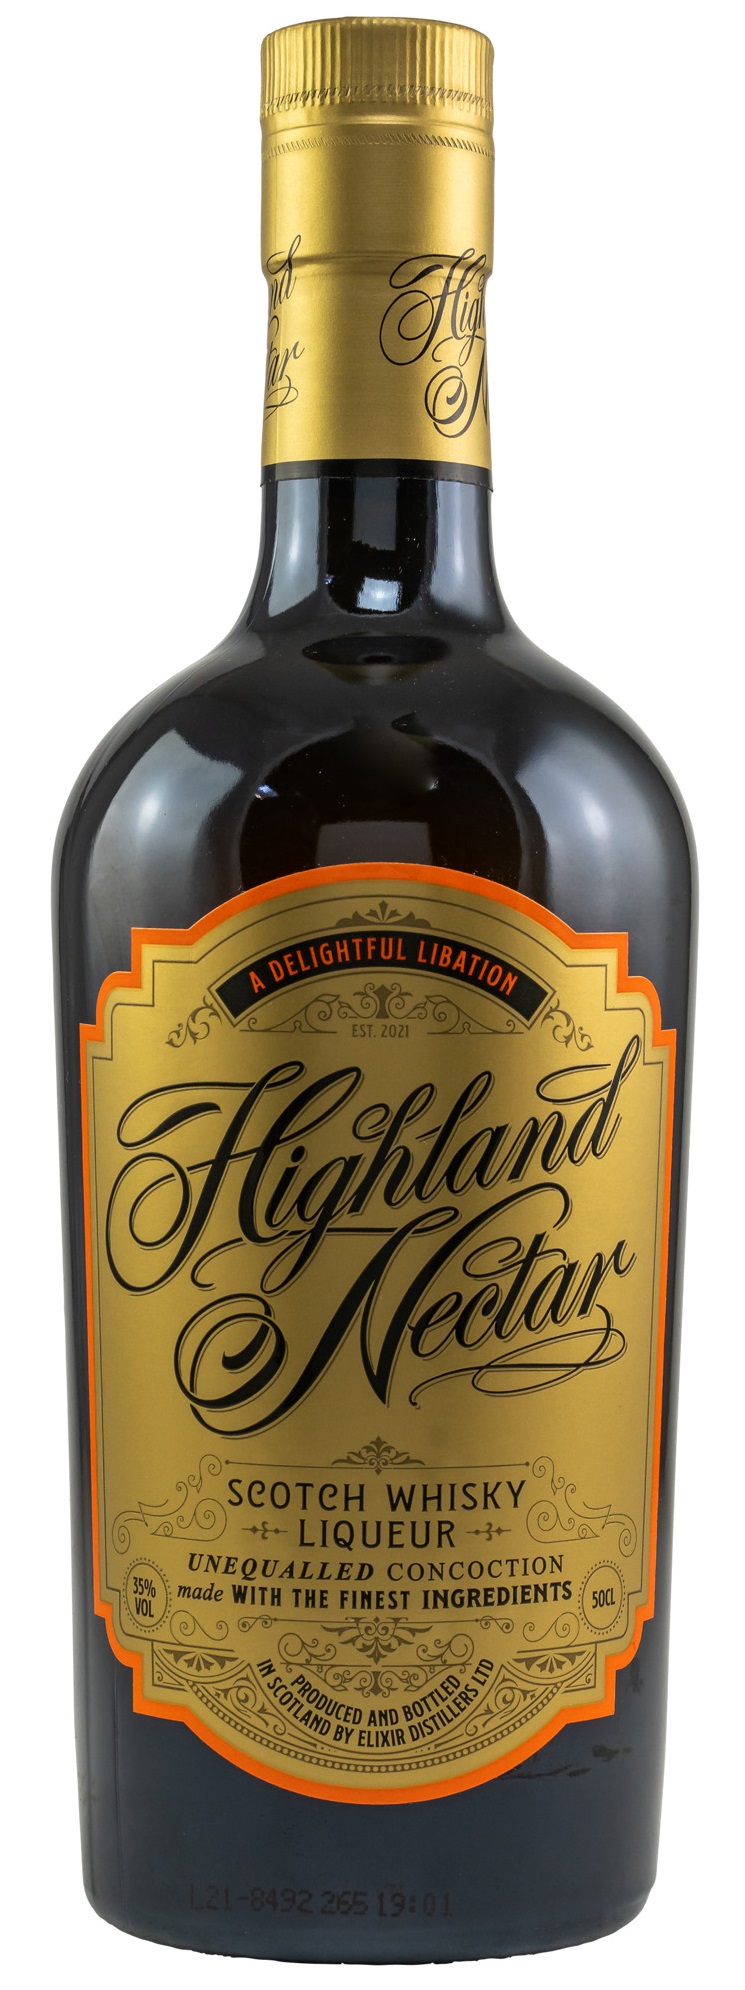 Highland Nectar Scotch Whisky Likör 35.0% 0,5l